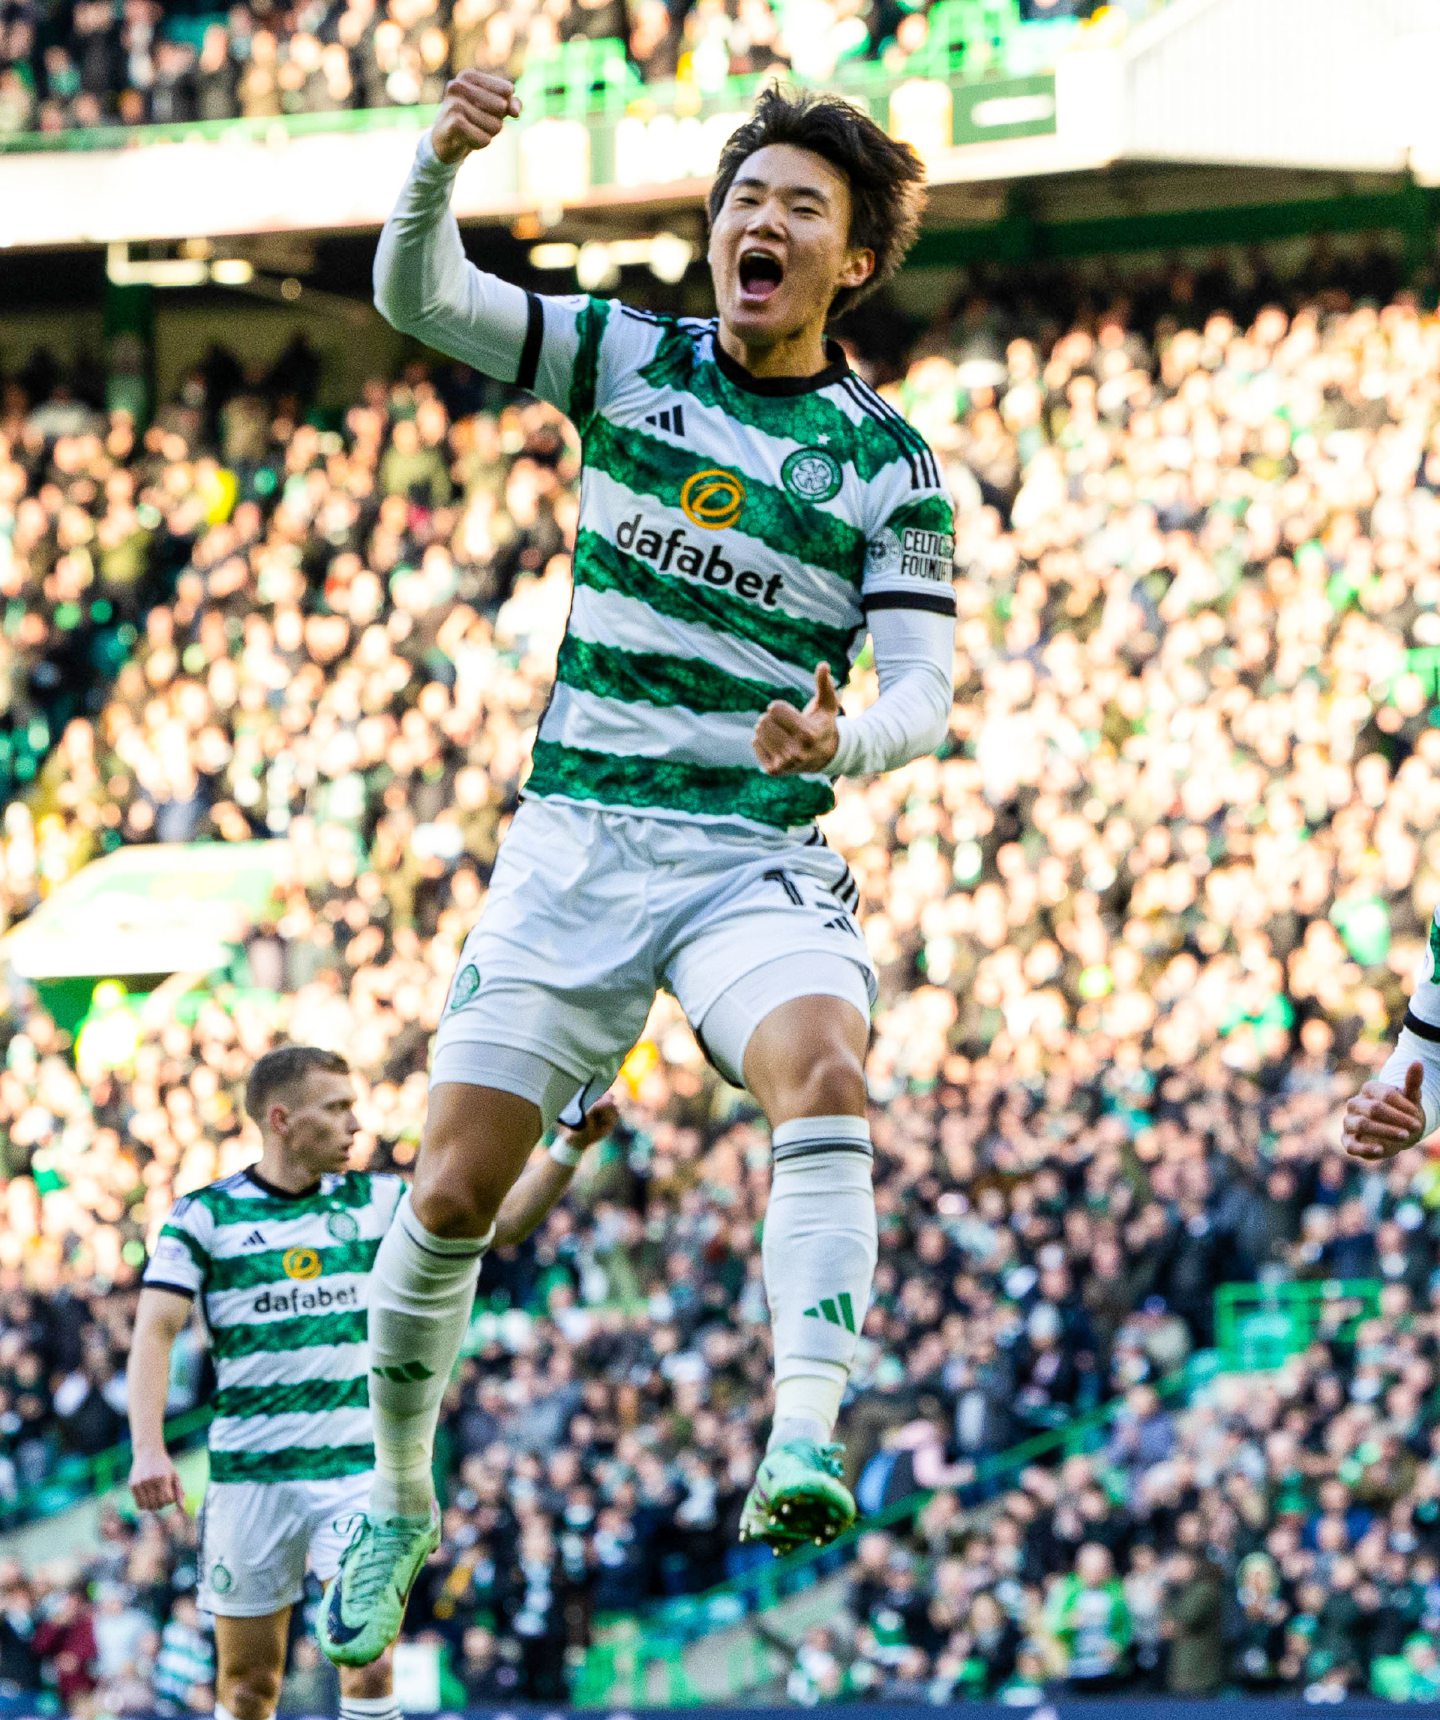 Celtic's Yang Hyun-Jun celebrating